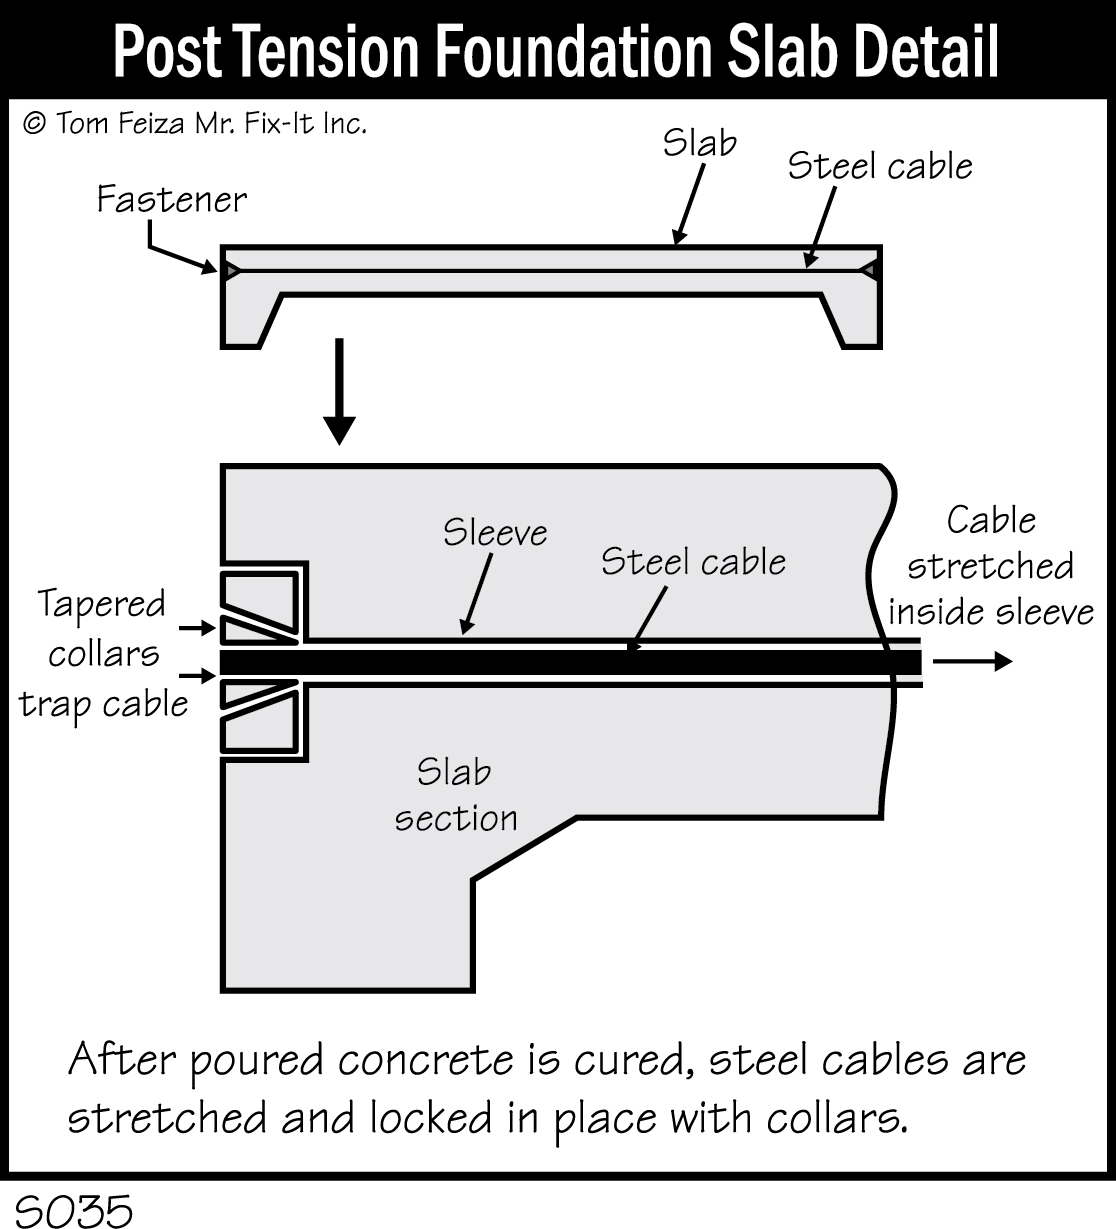 S035 - Post Tension Foundation Slab Detail